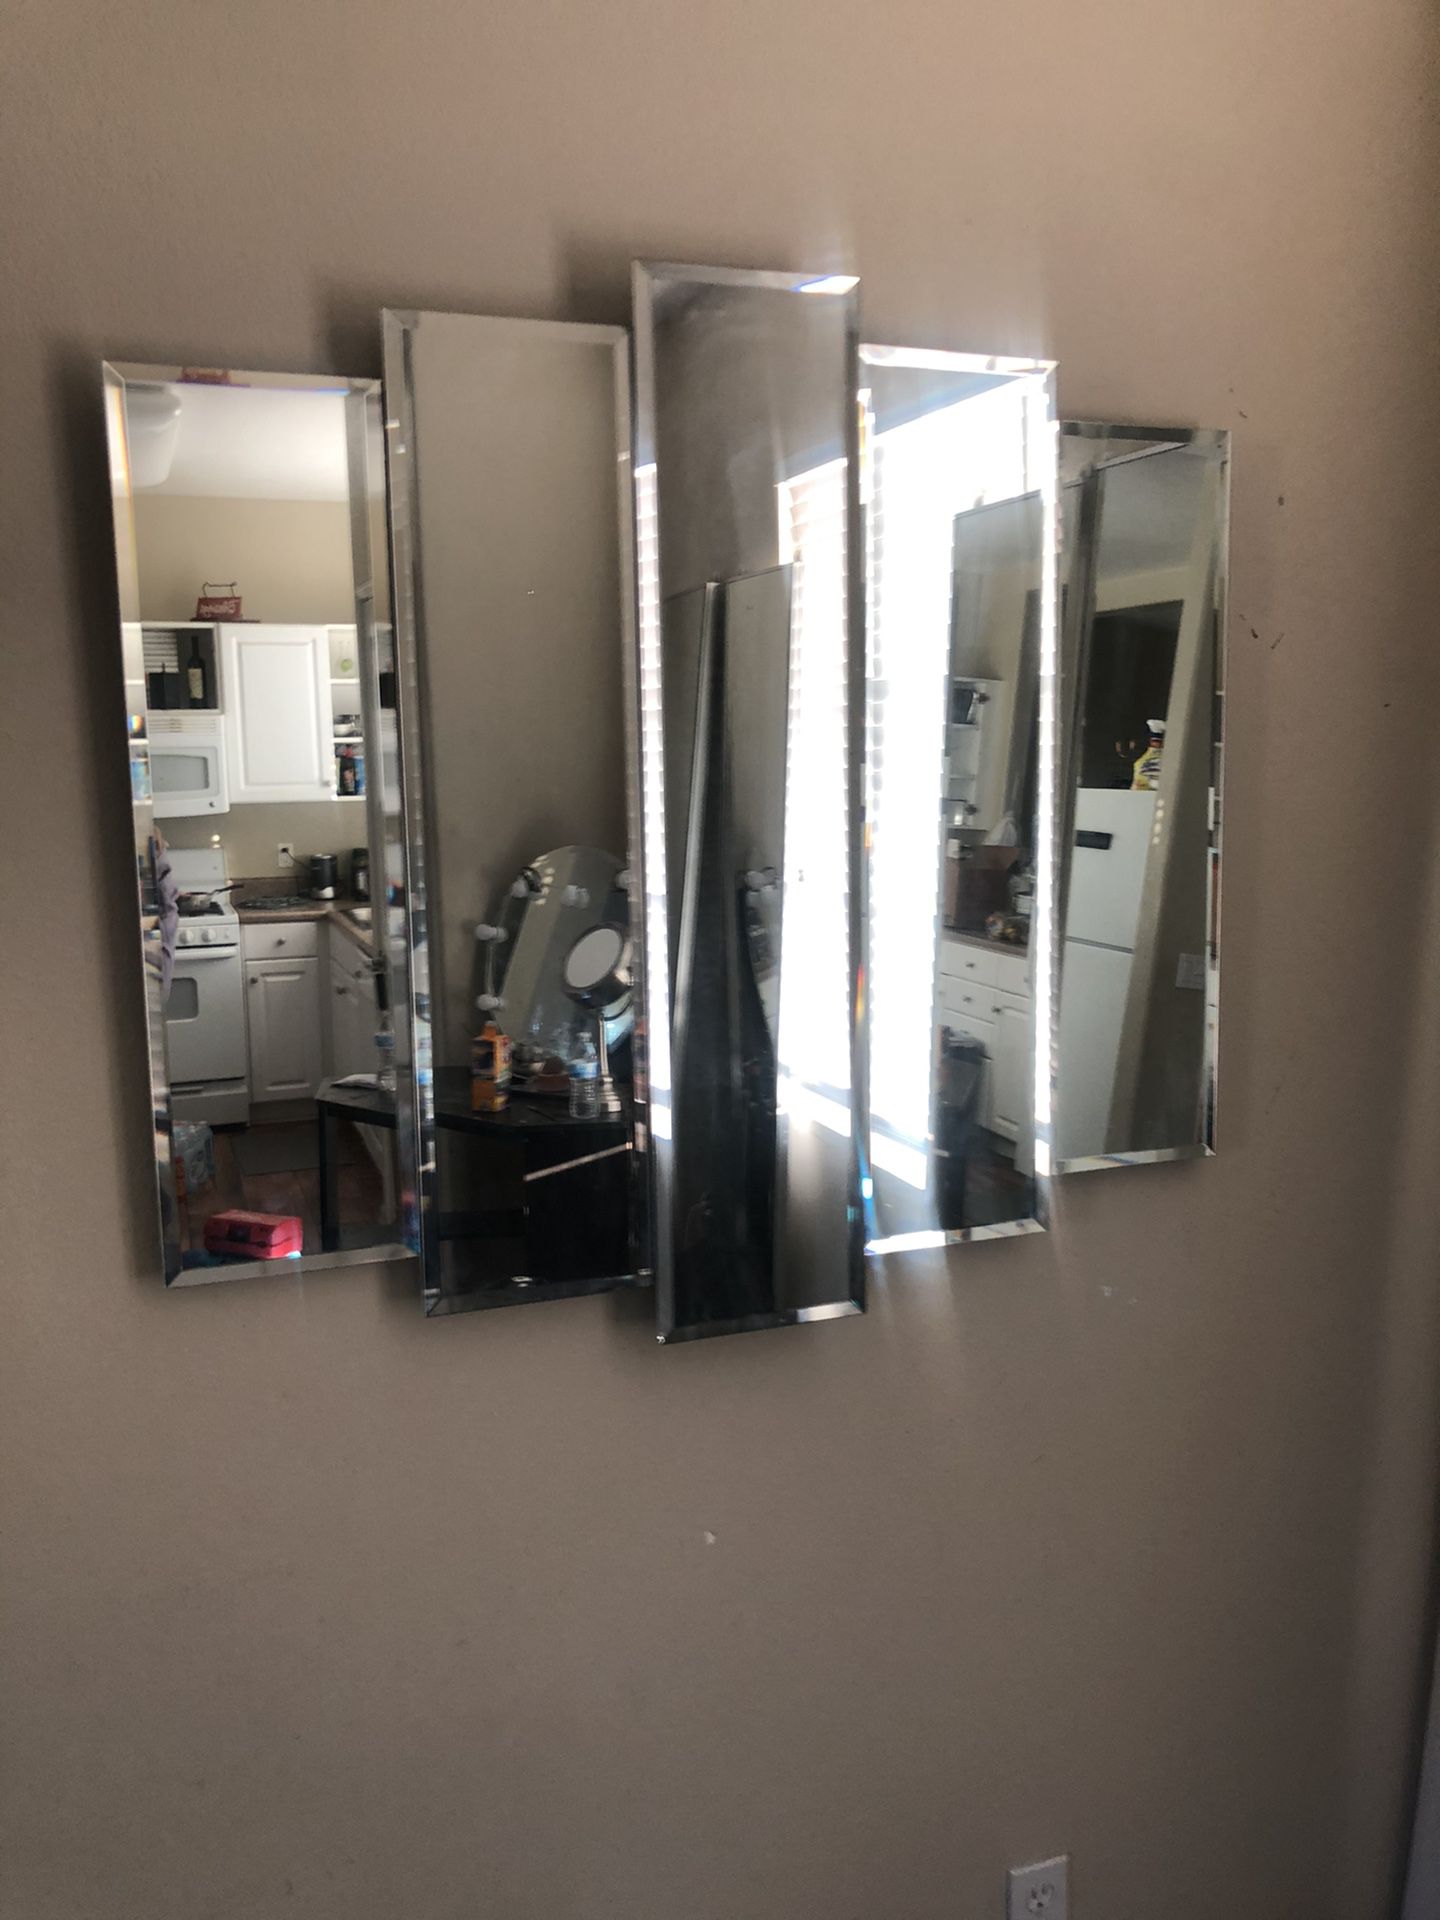 Mirror wall decor